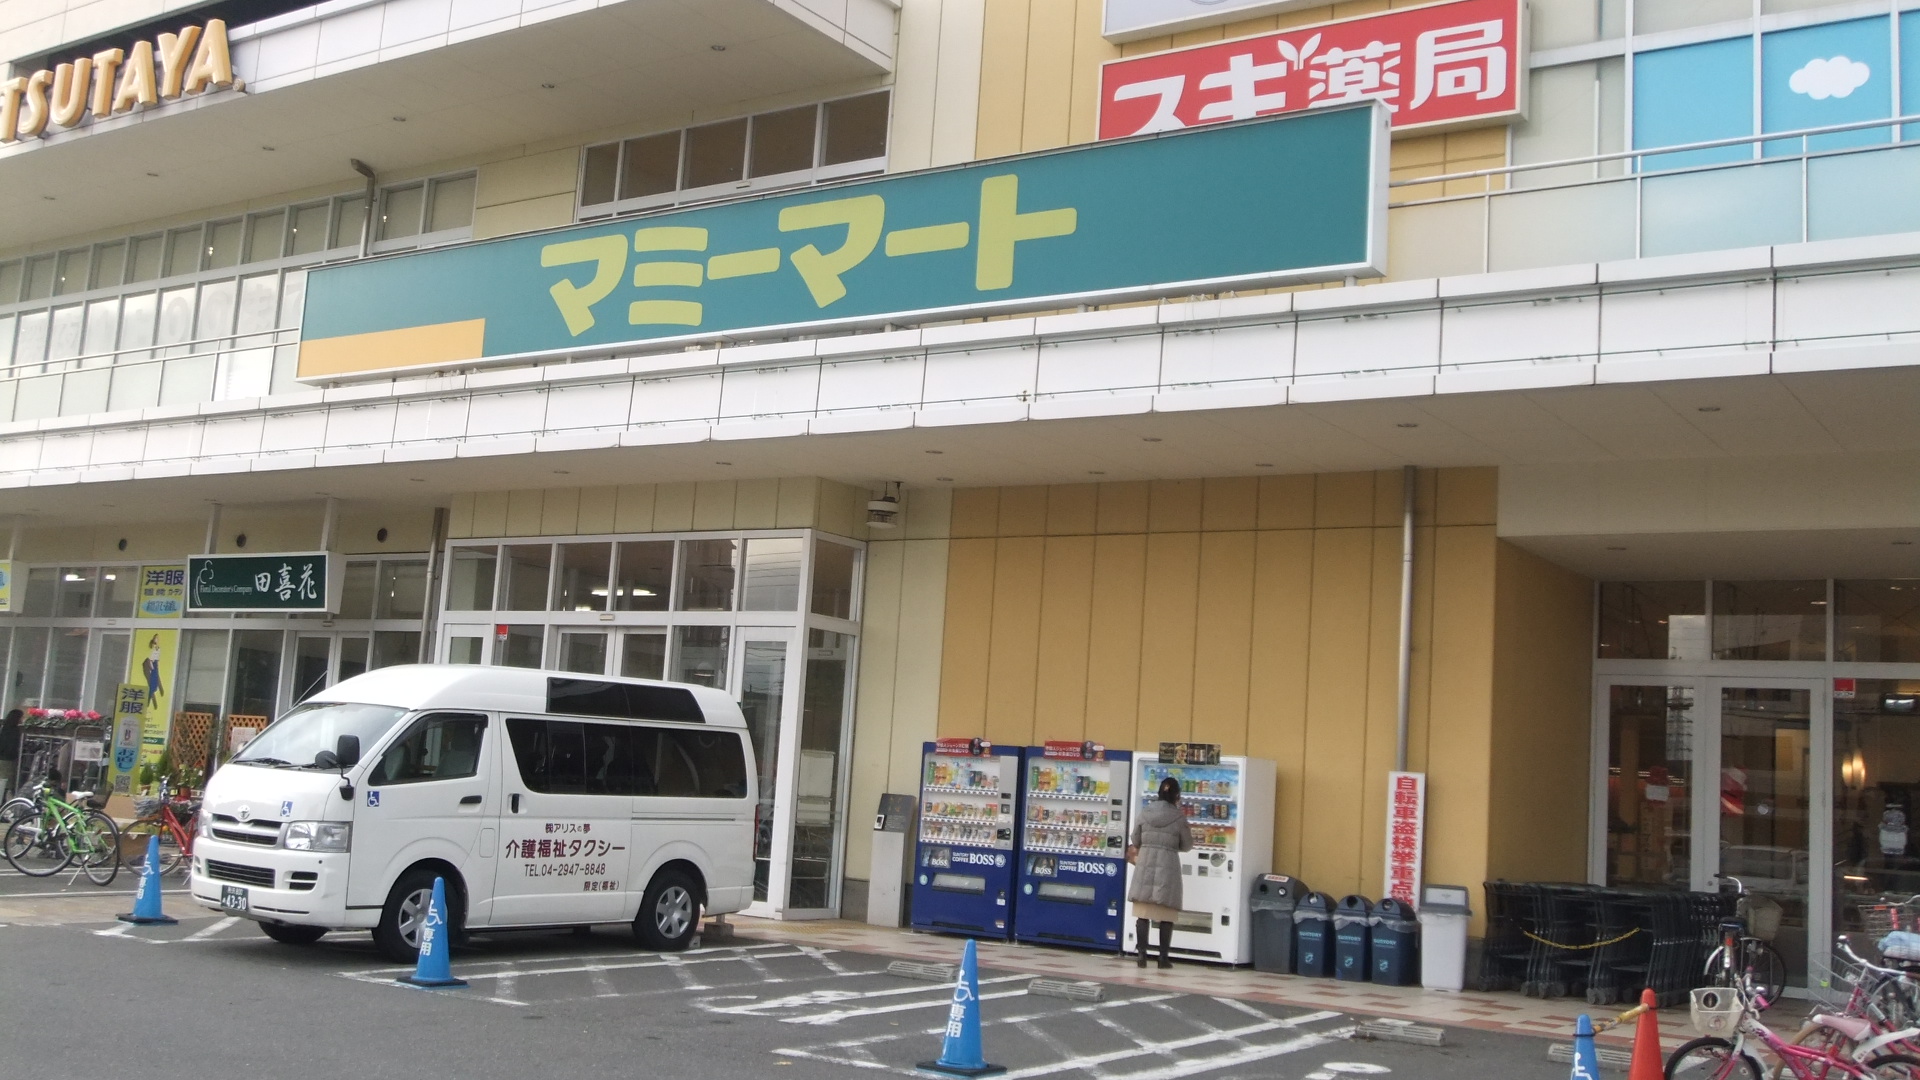 Rental video. TSUTAYA Tokorozawa Yamaguchi shop 1094m up (video rental)